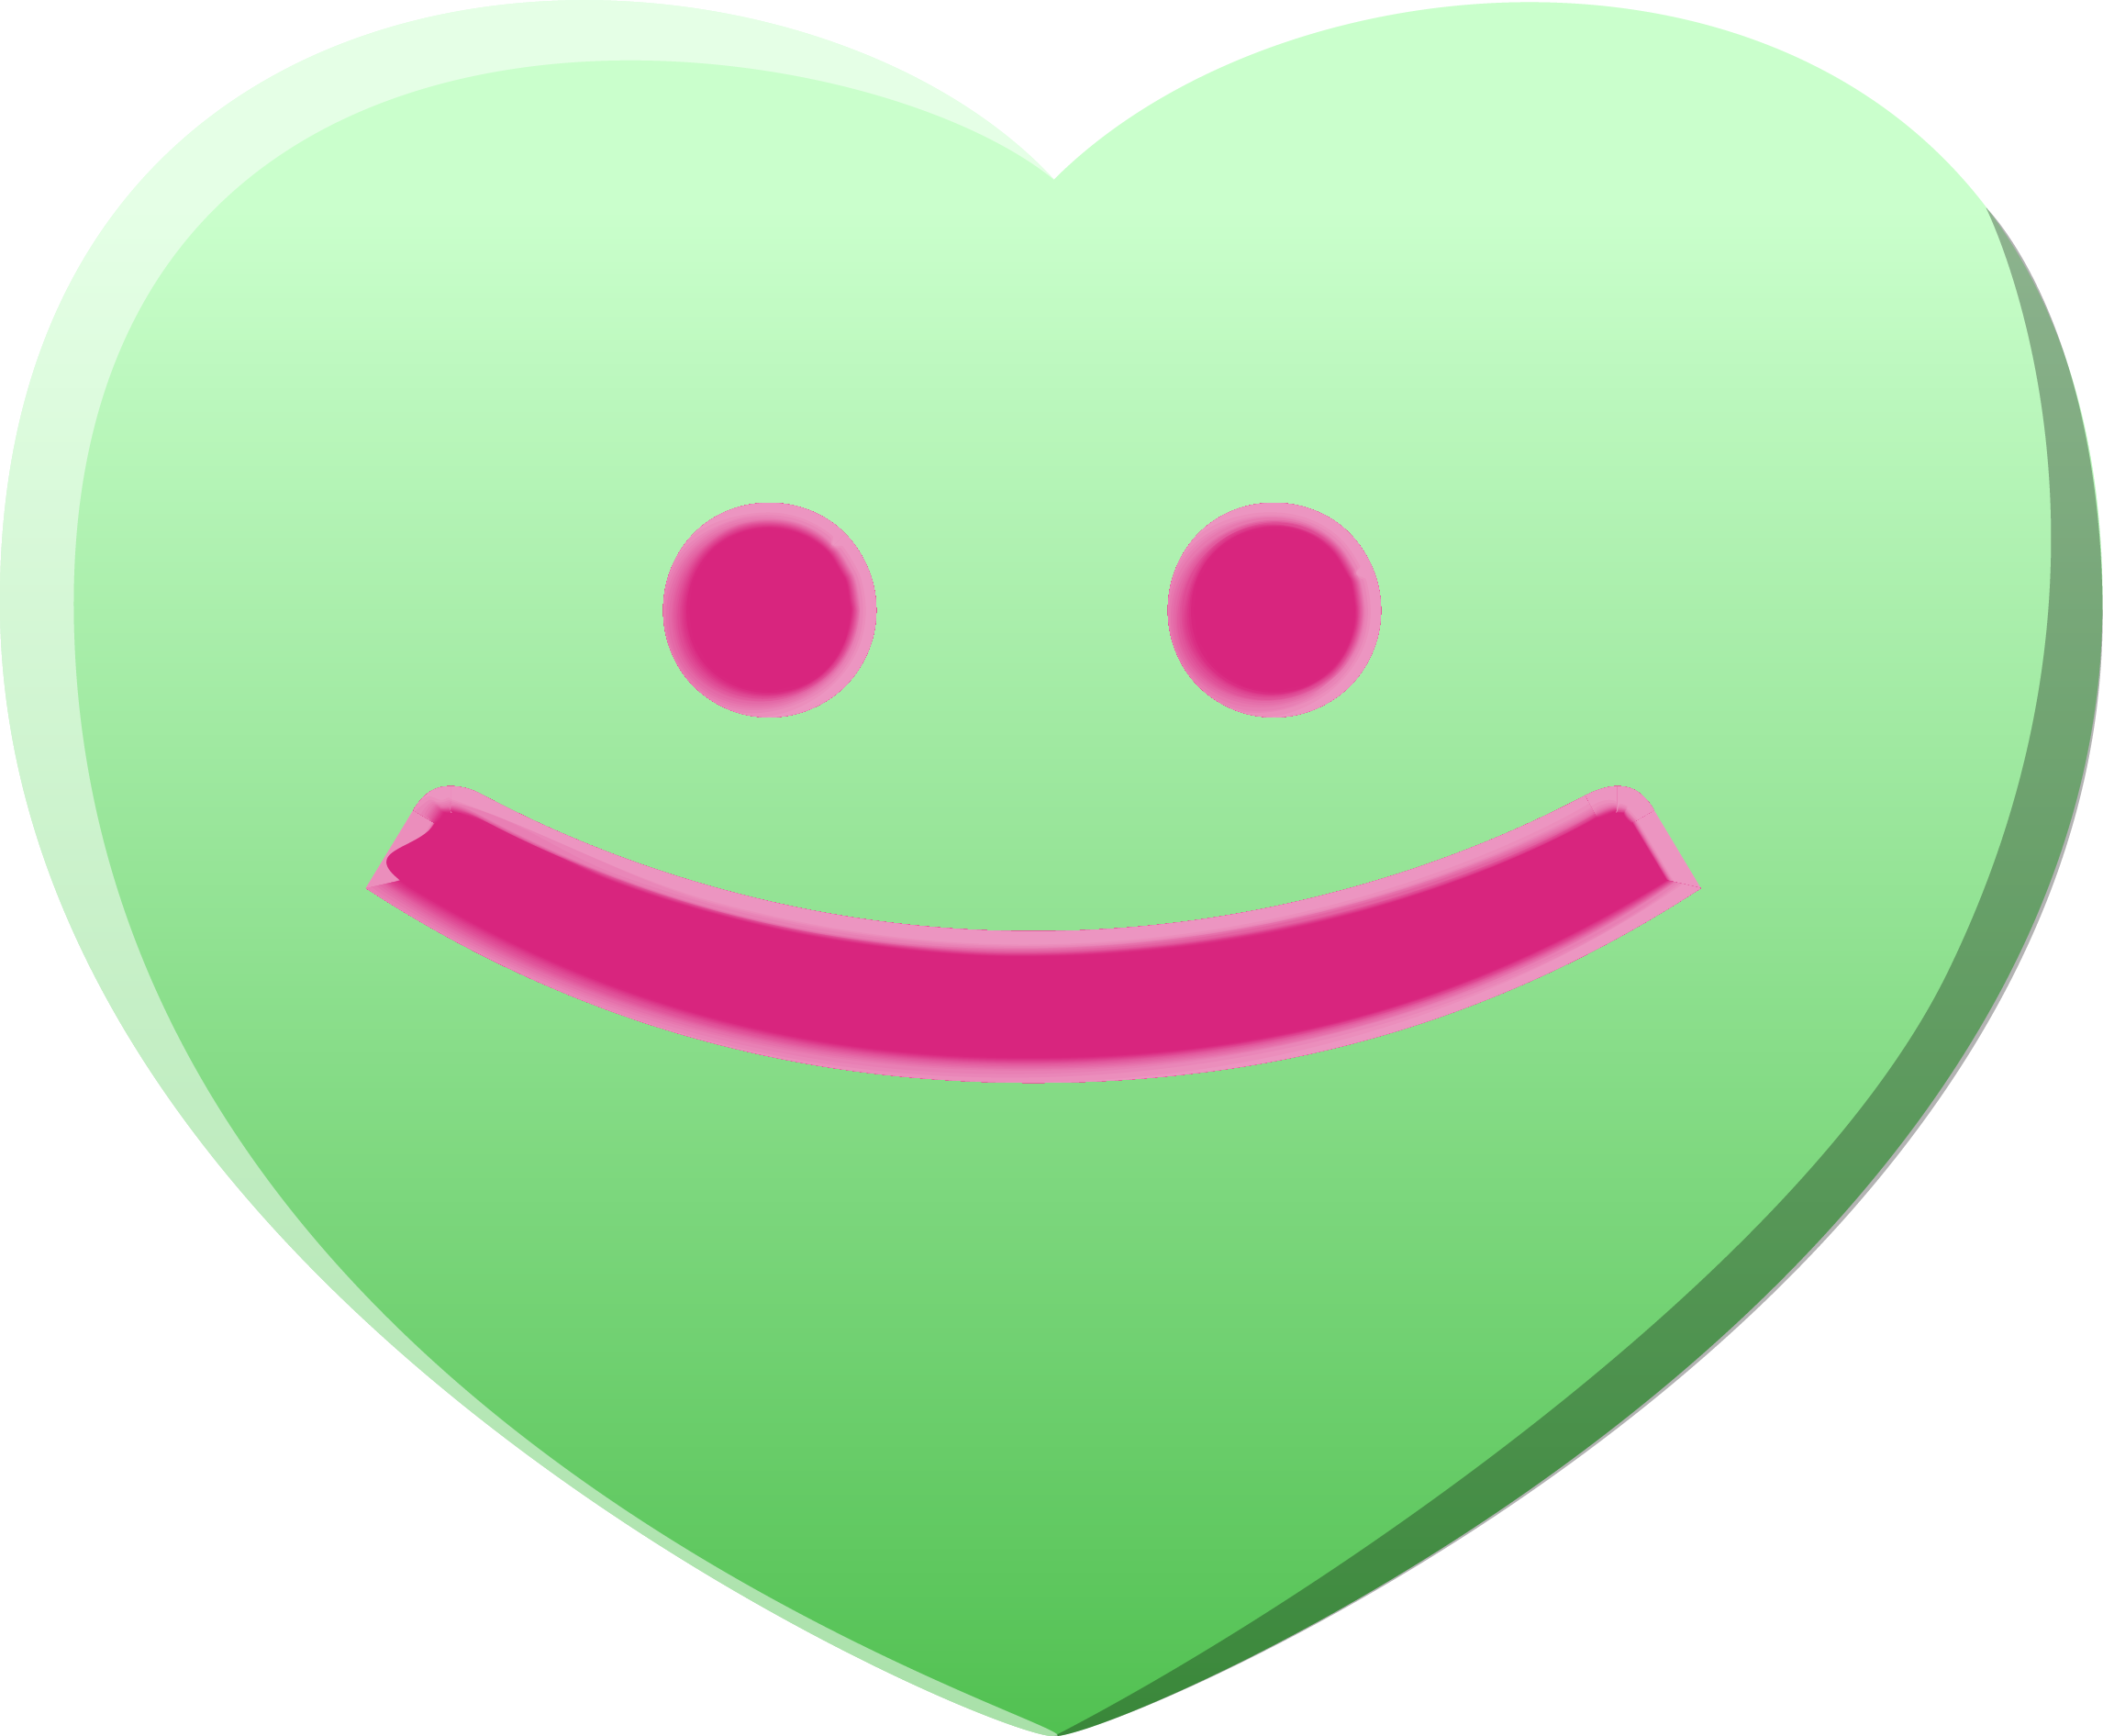 Smiley Heart - ClipArt Best